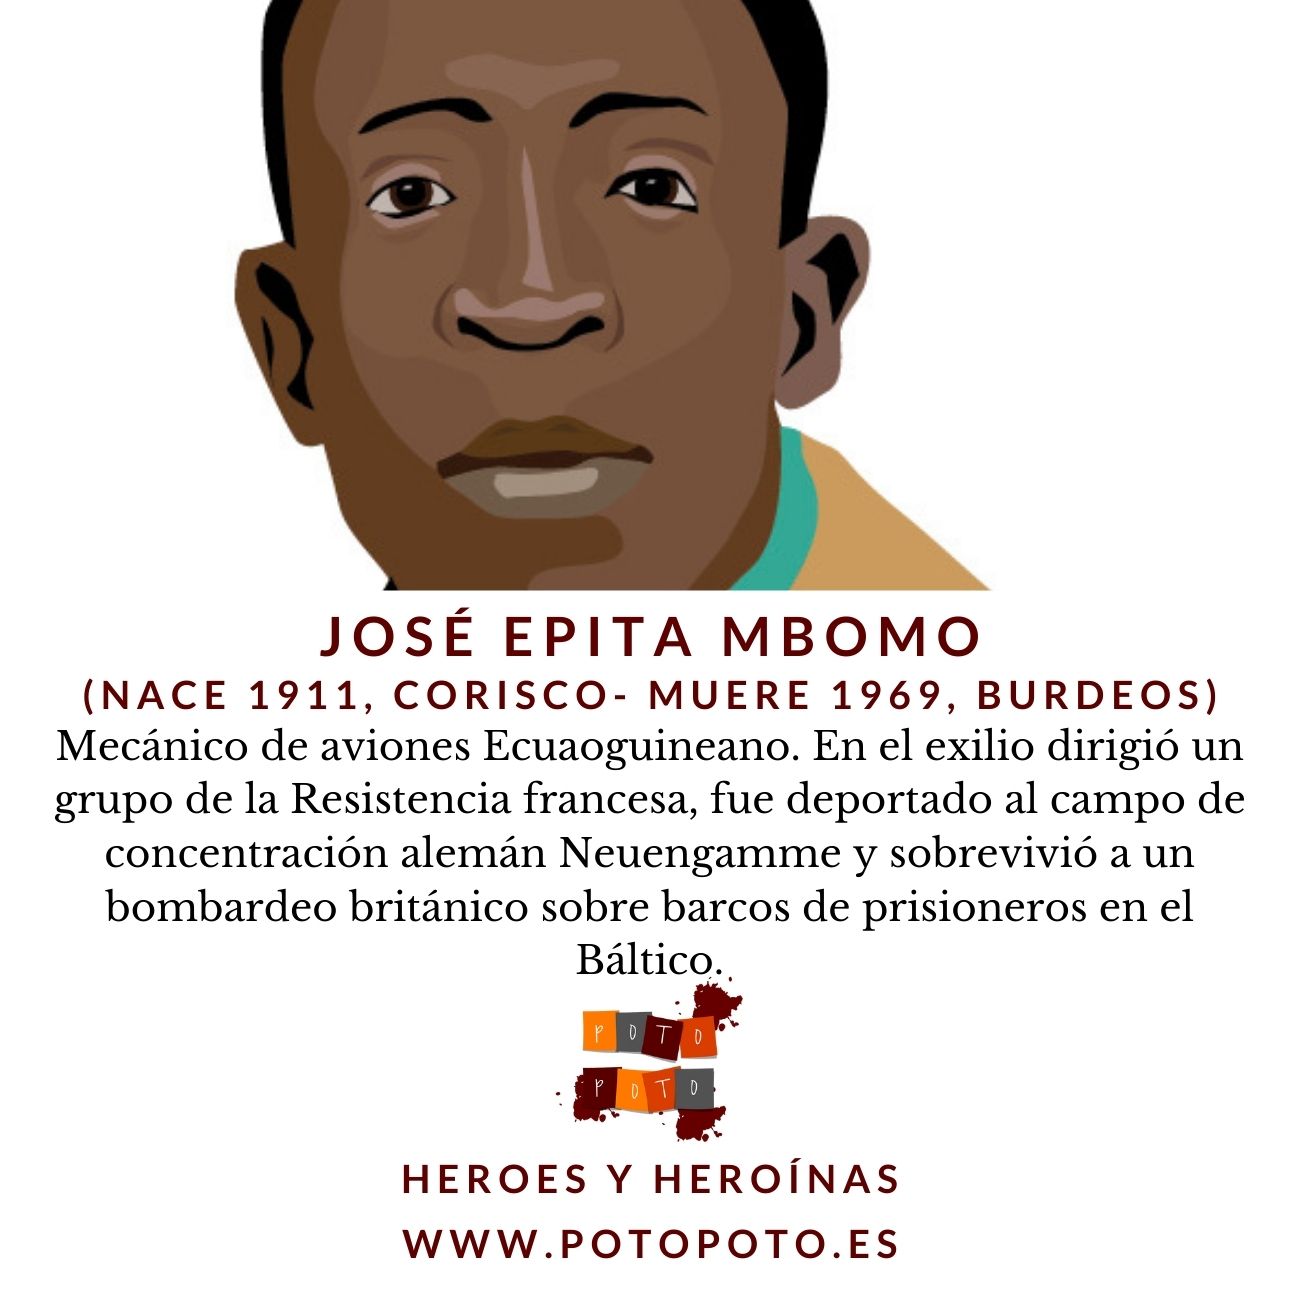 José Epita Mbomo